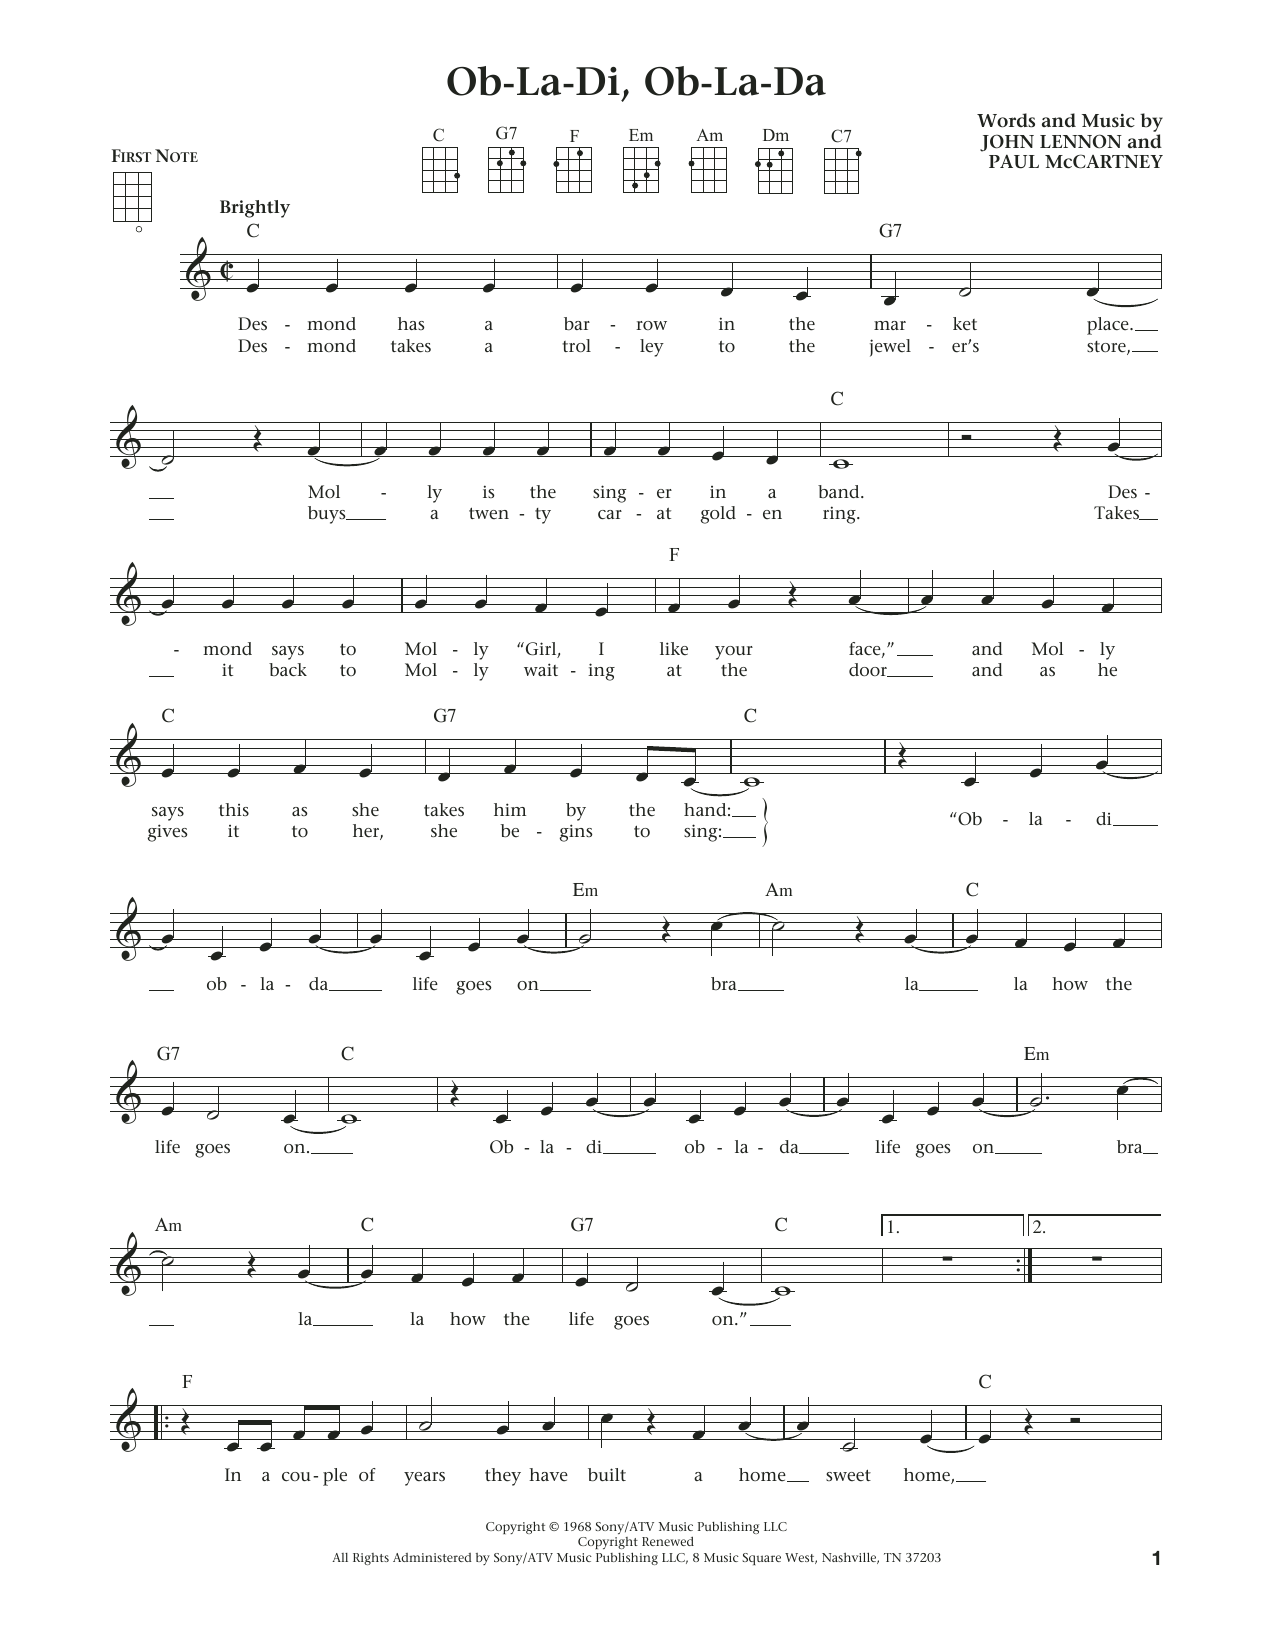 Download The Beatles Ob-La-Di, Ob-La-Da Sheet Music and learn how to play Ukulele PDF digital score in minutes